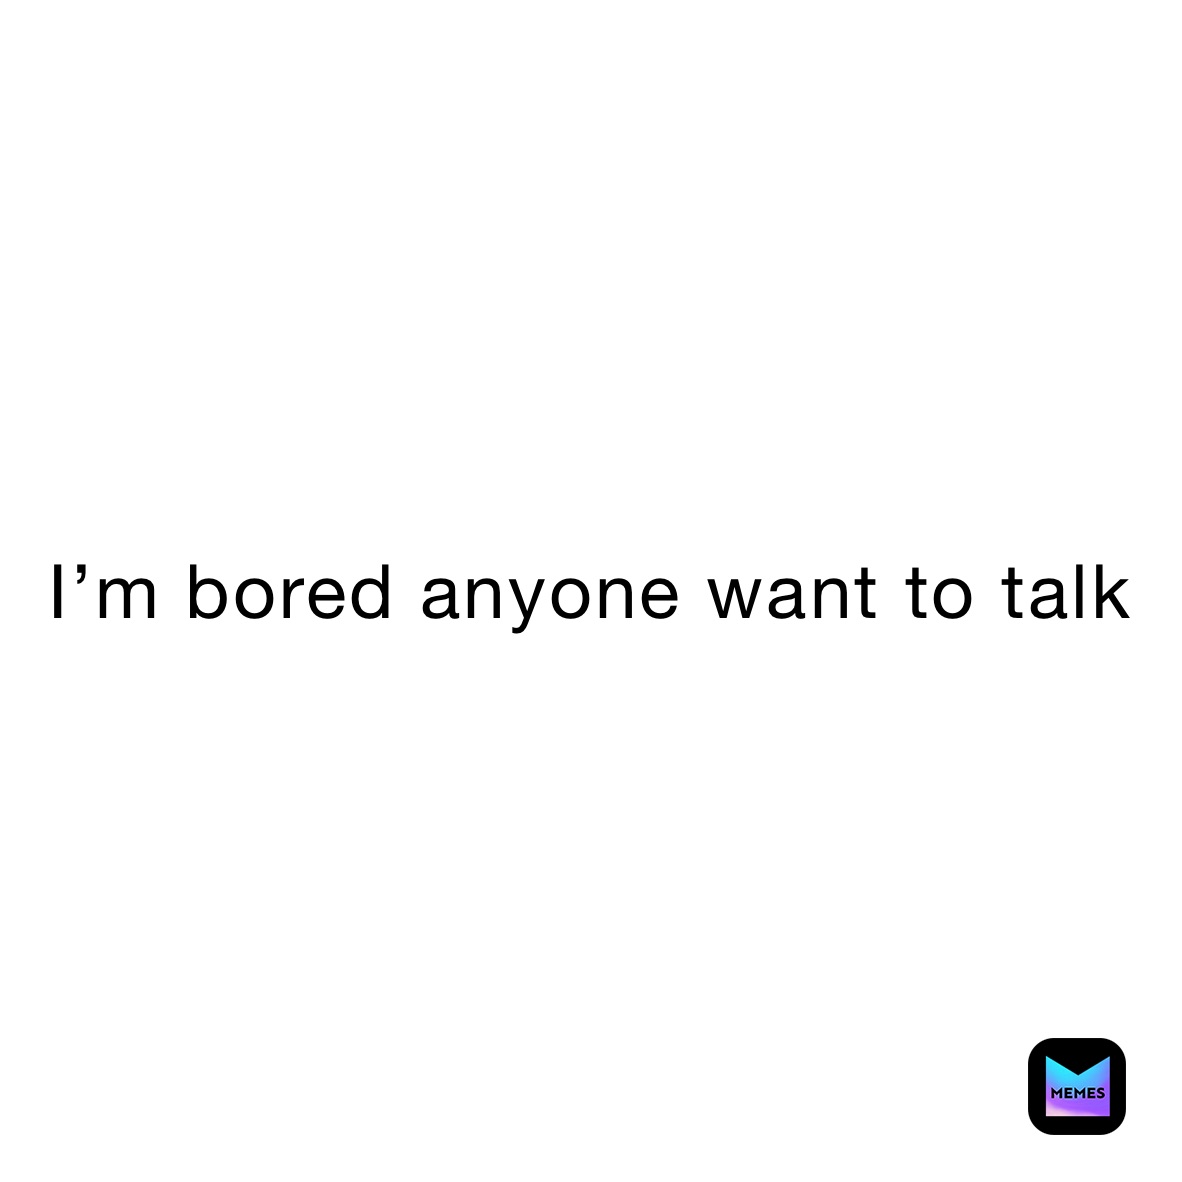 I’m bored anyone want to talk